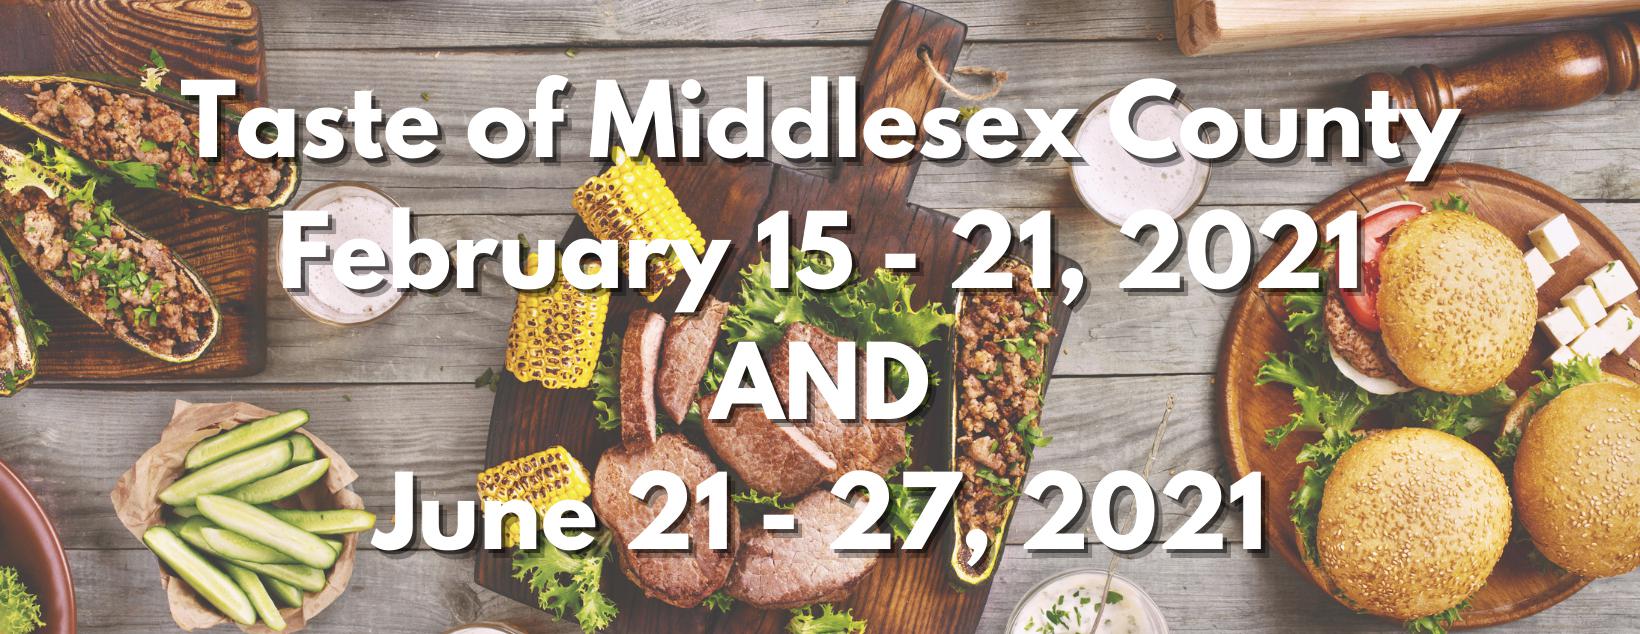 Taste of Middlesex County begins Feb. 15